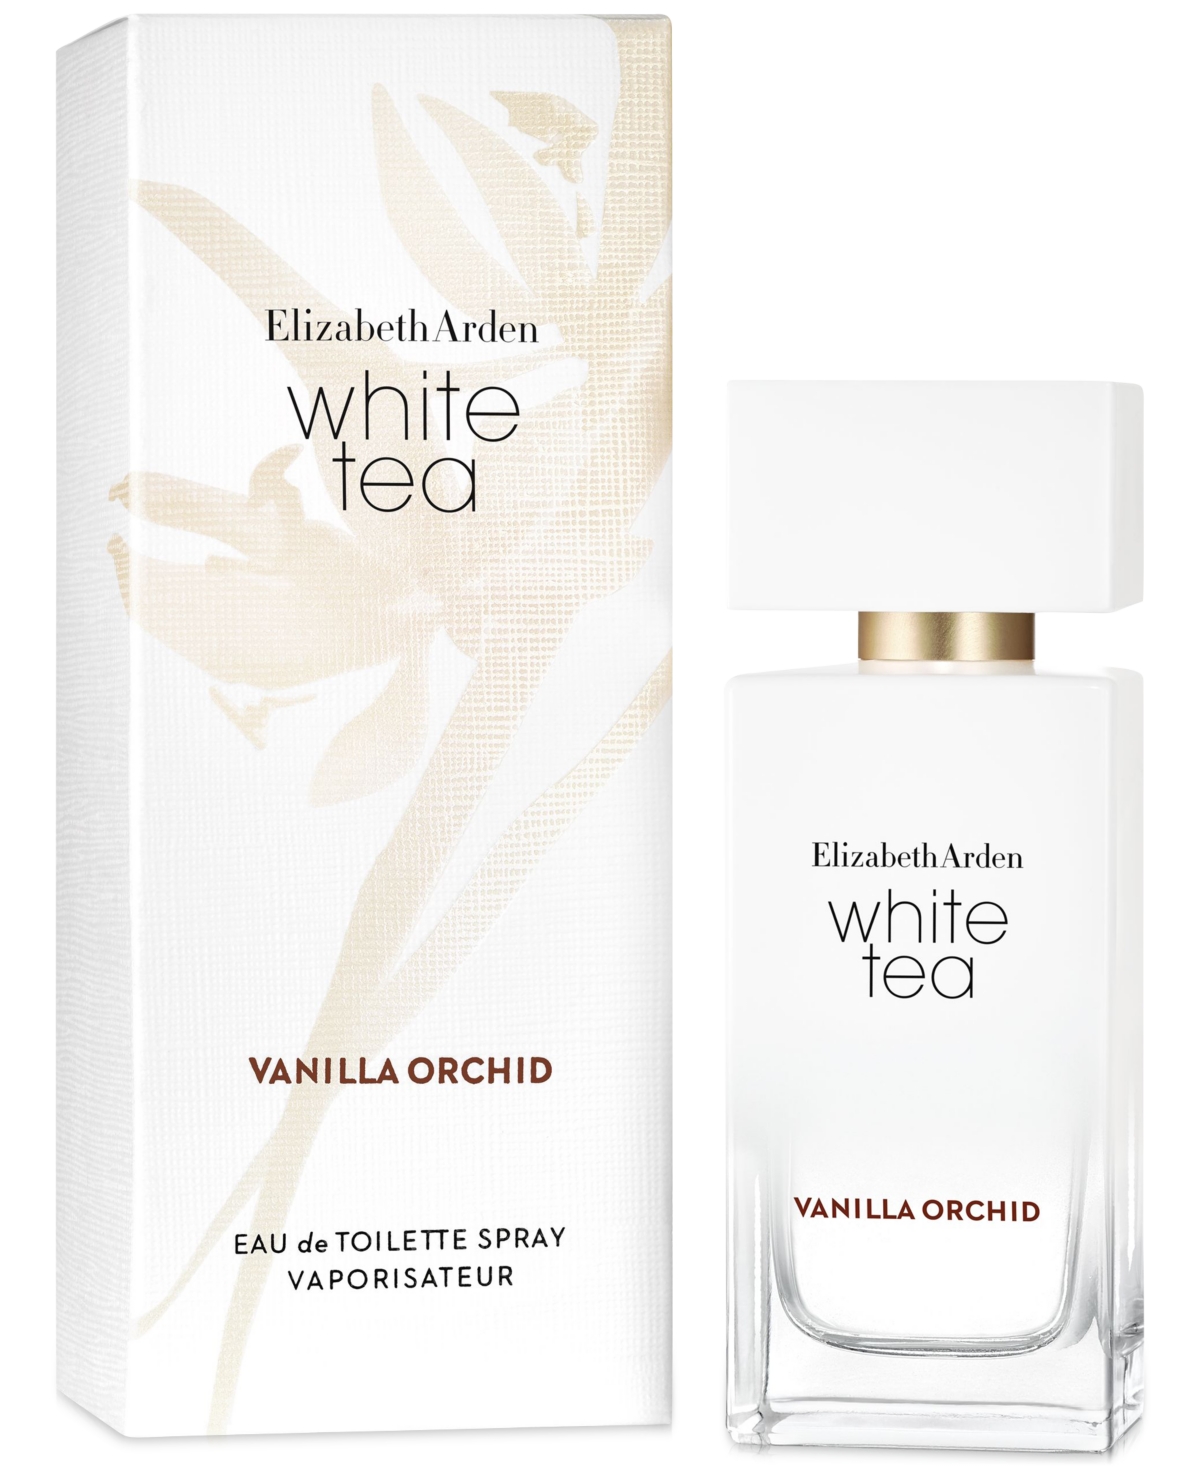 White Tea Vanilla Orchid Eau de Toilette Spray, 1.7-oz.